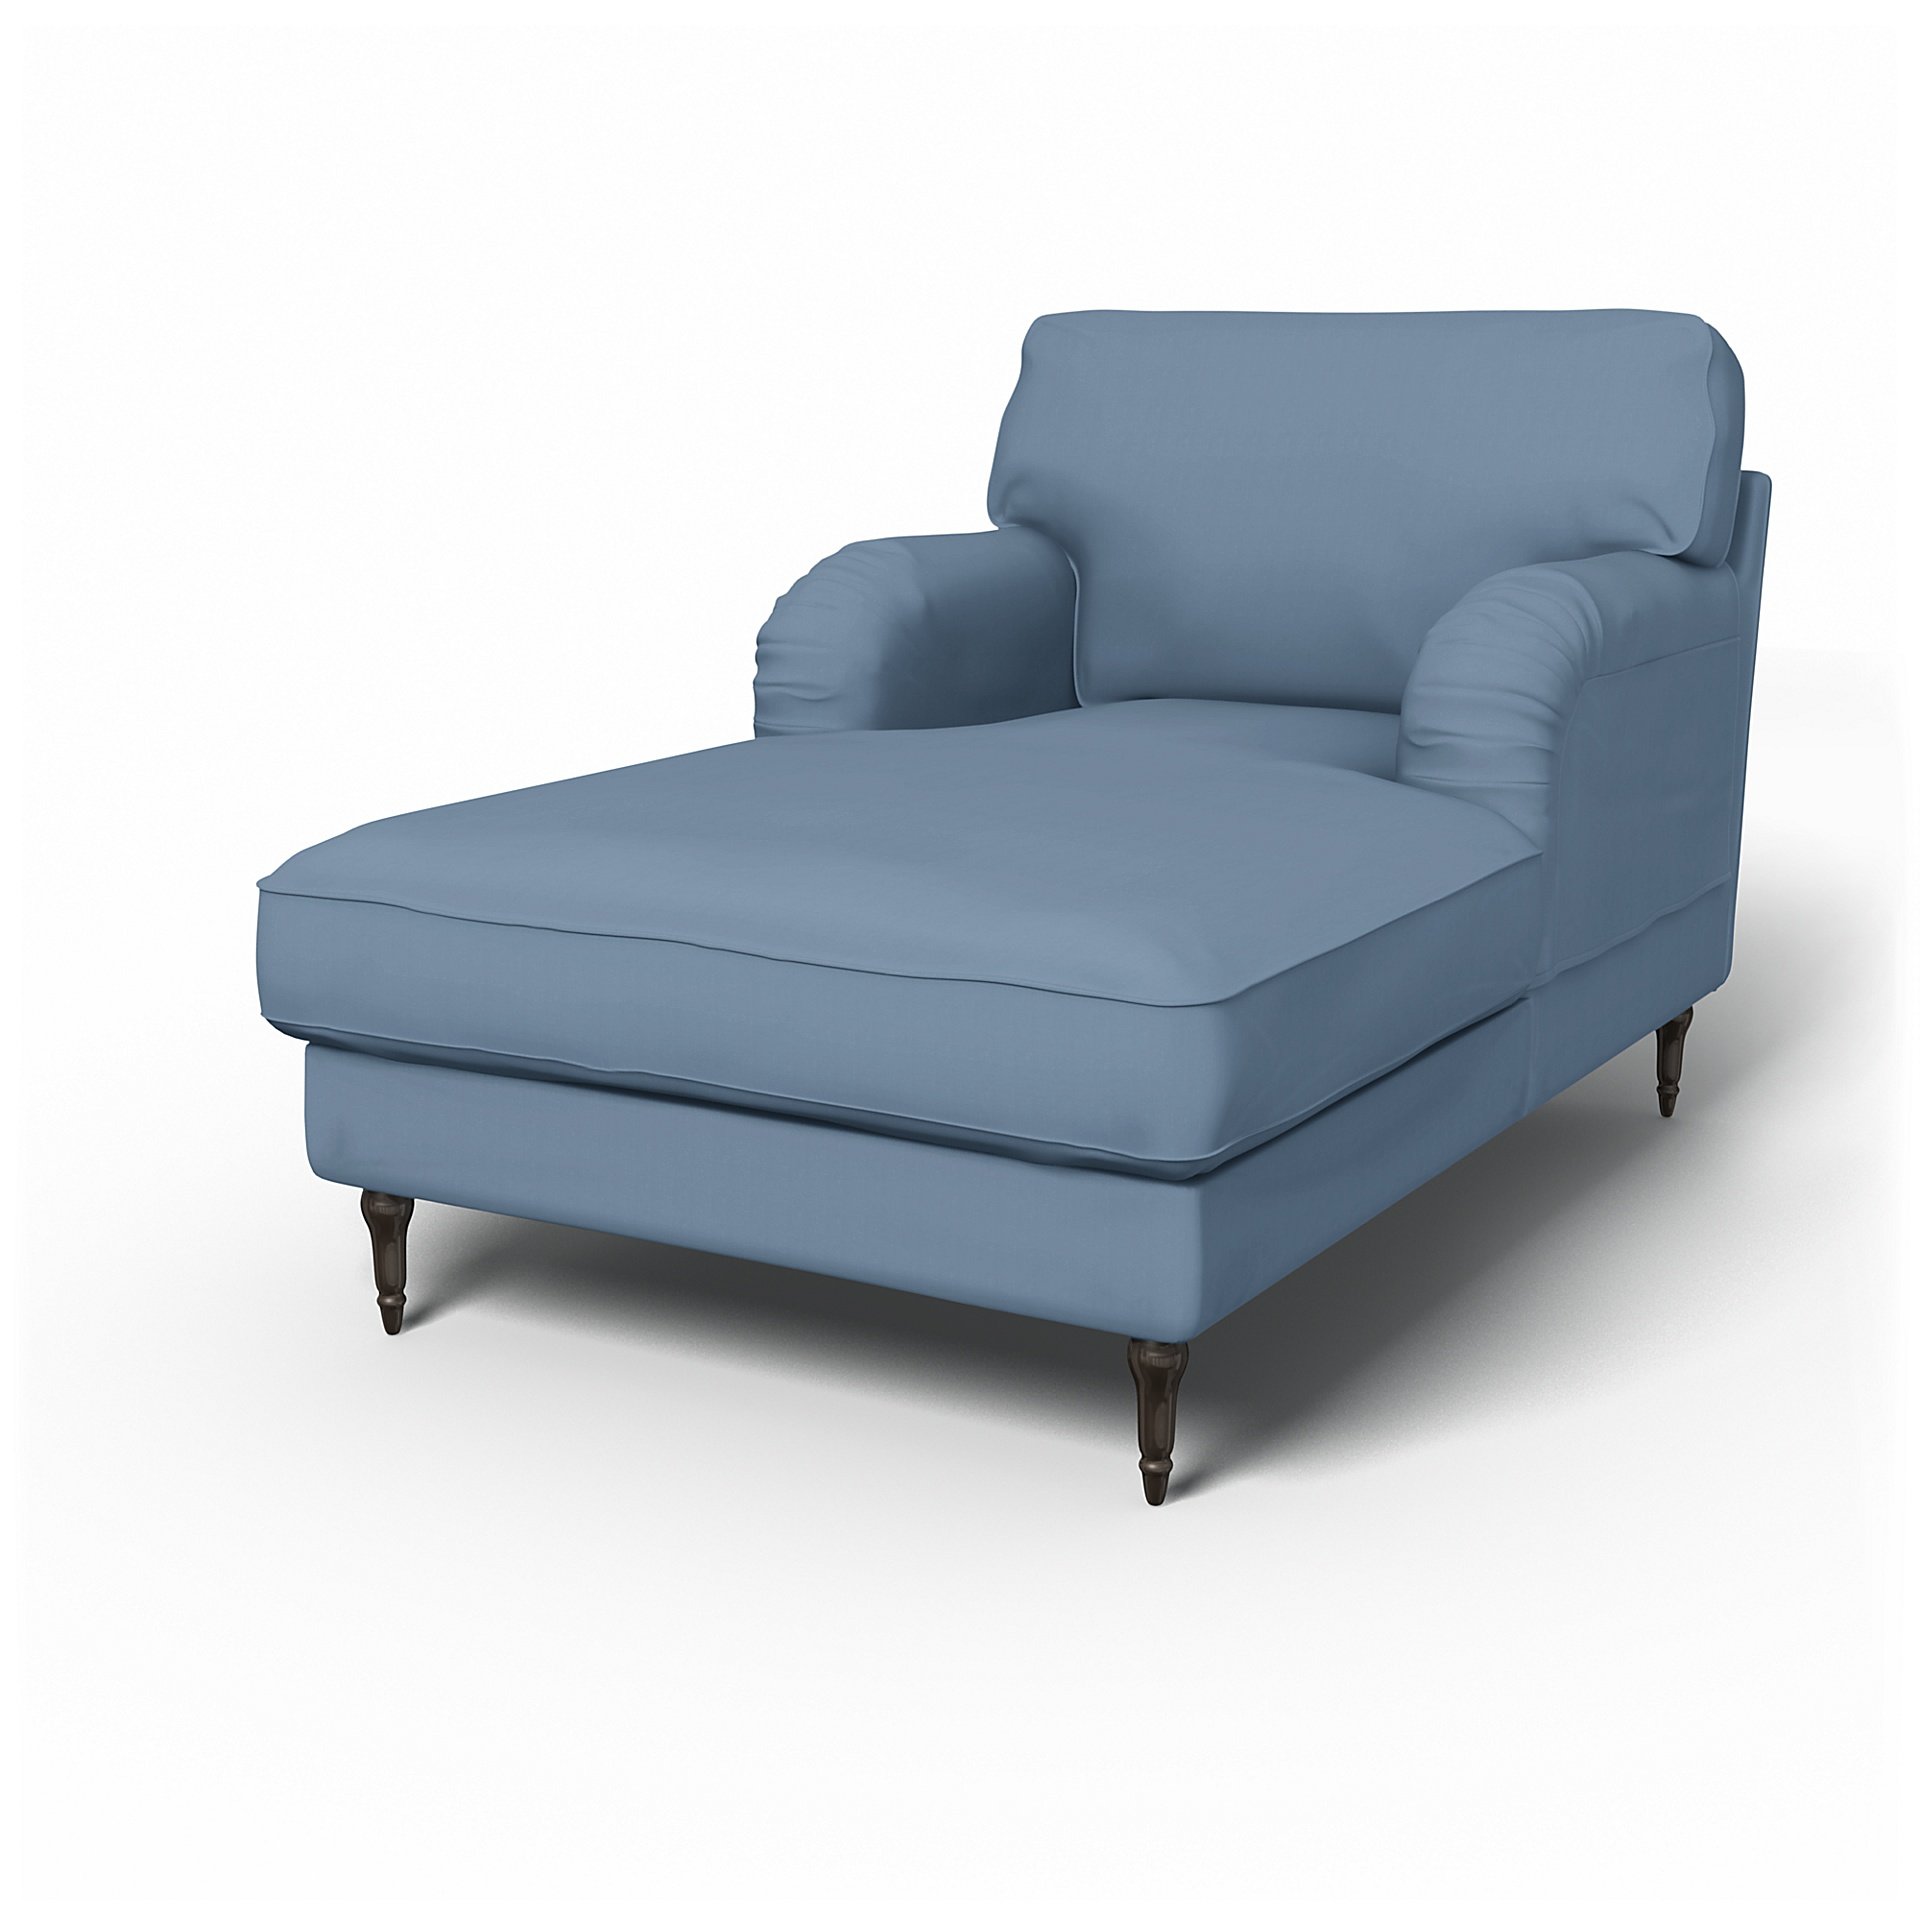 IKEA - Stocksund Chaise Longue Cover, Dusty Blue, Cotton - Bemz